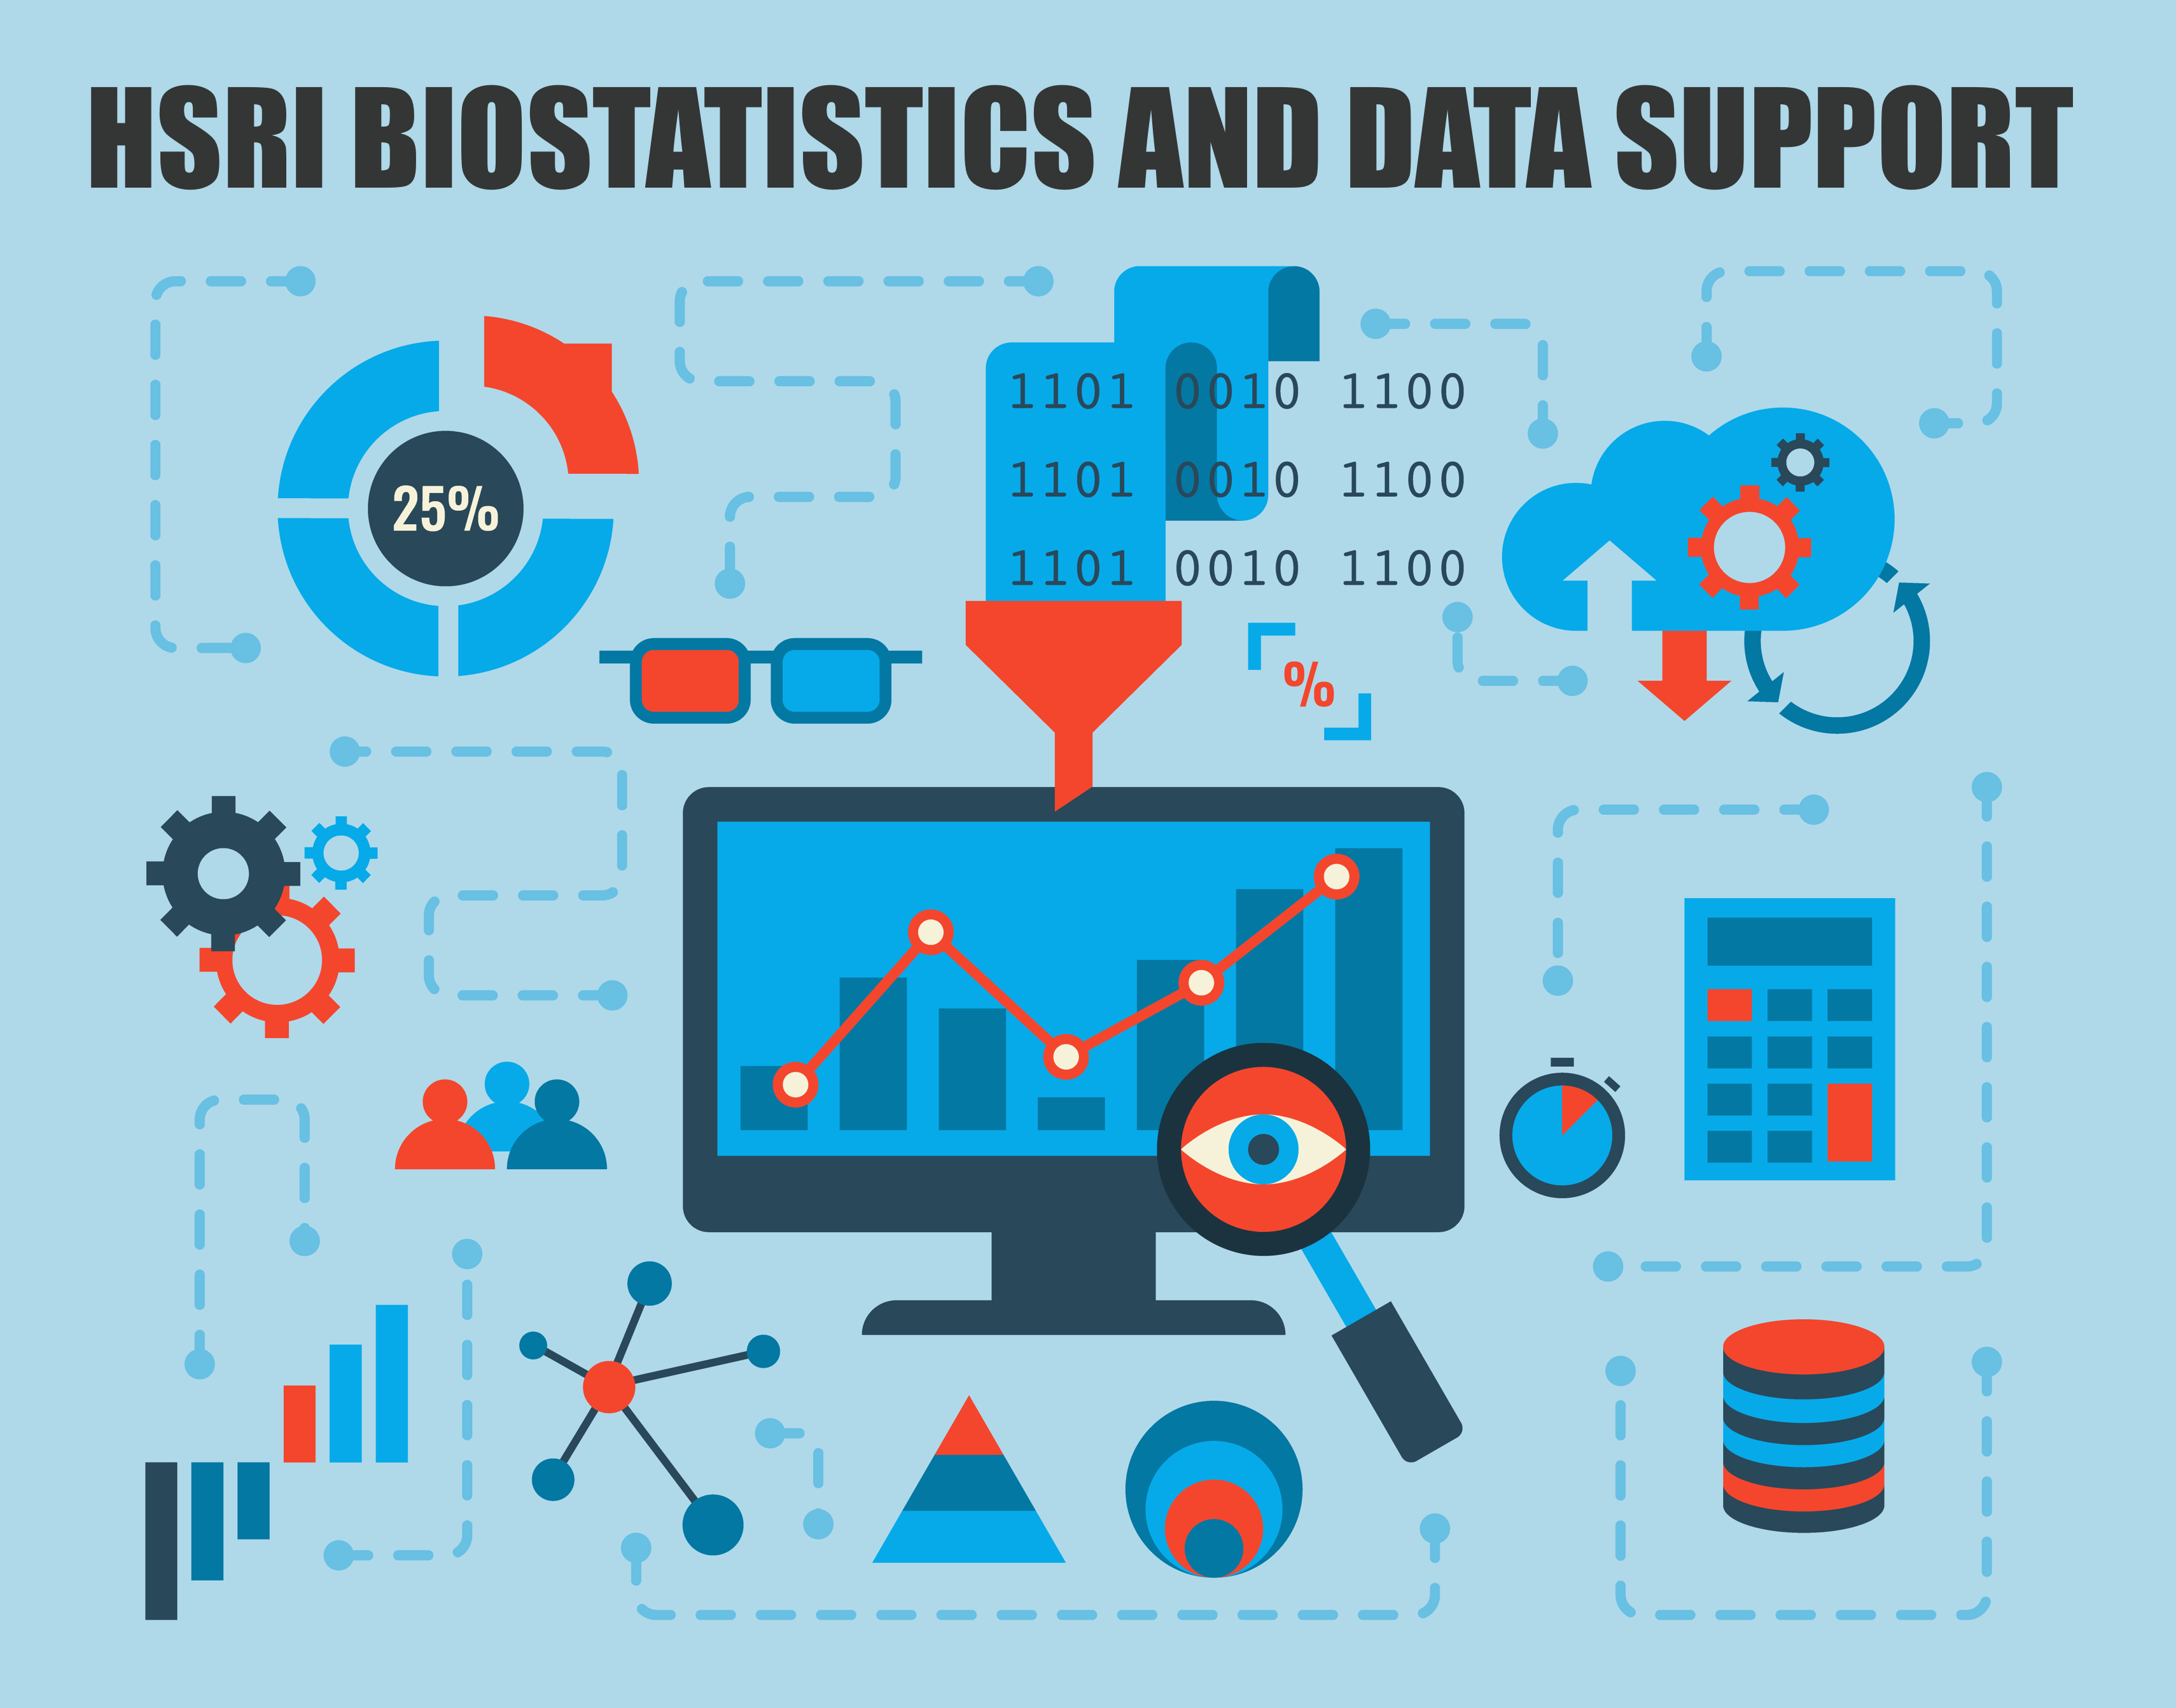 Biostatistics and Data Support core